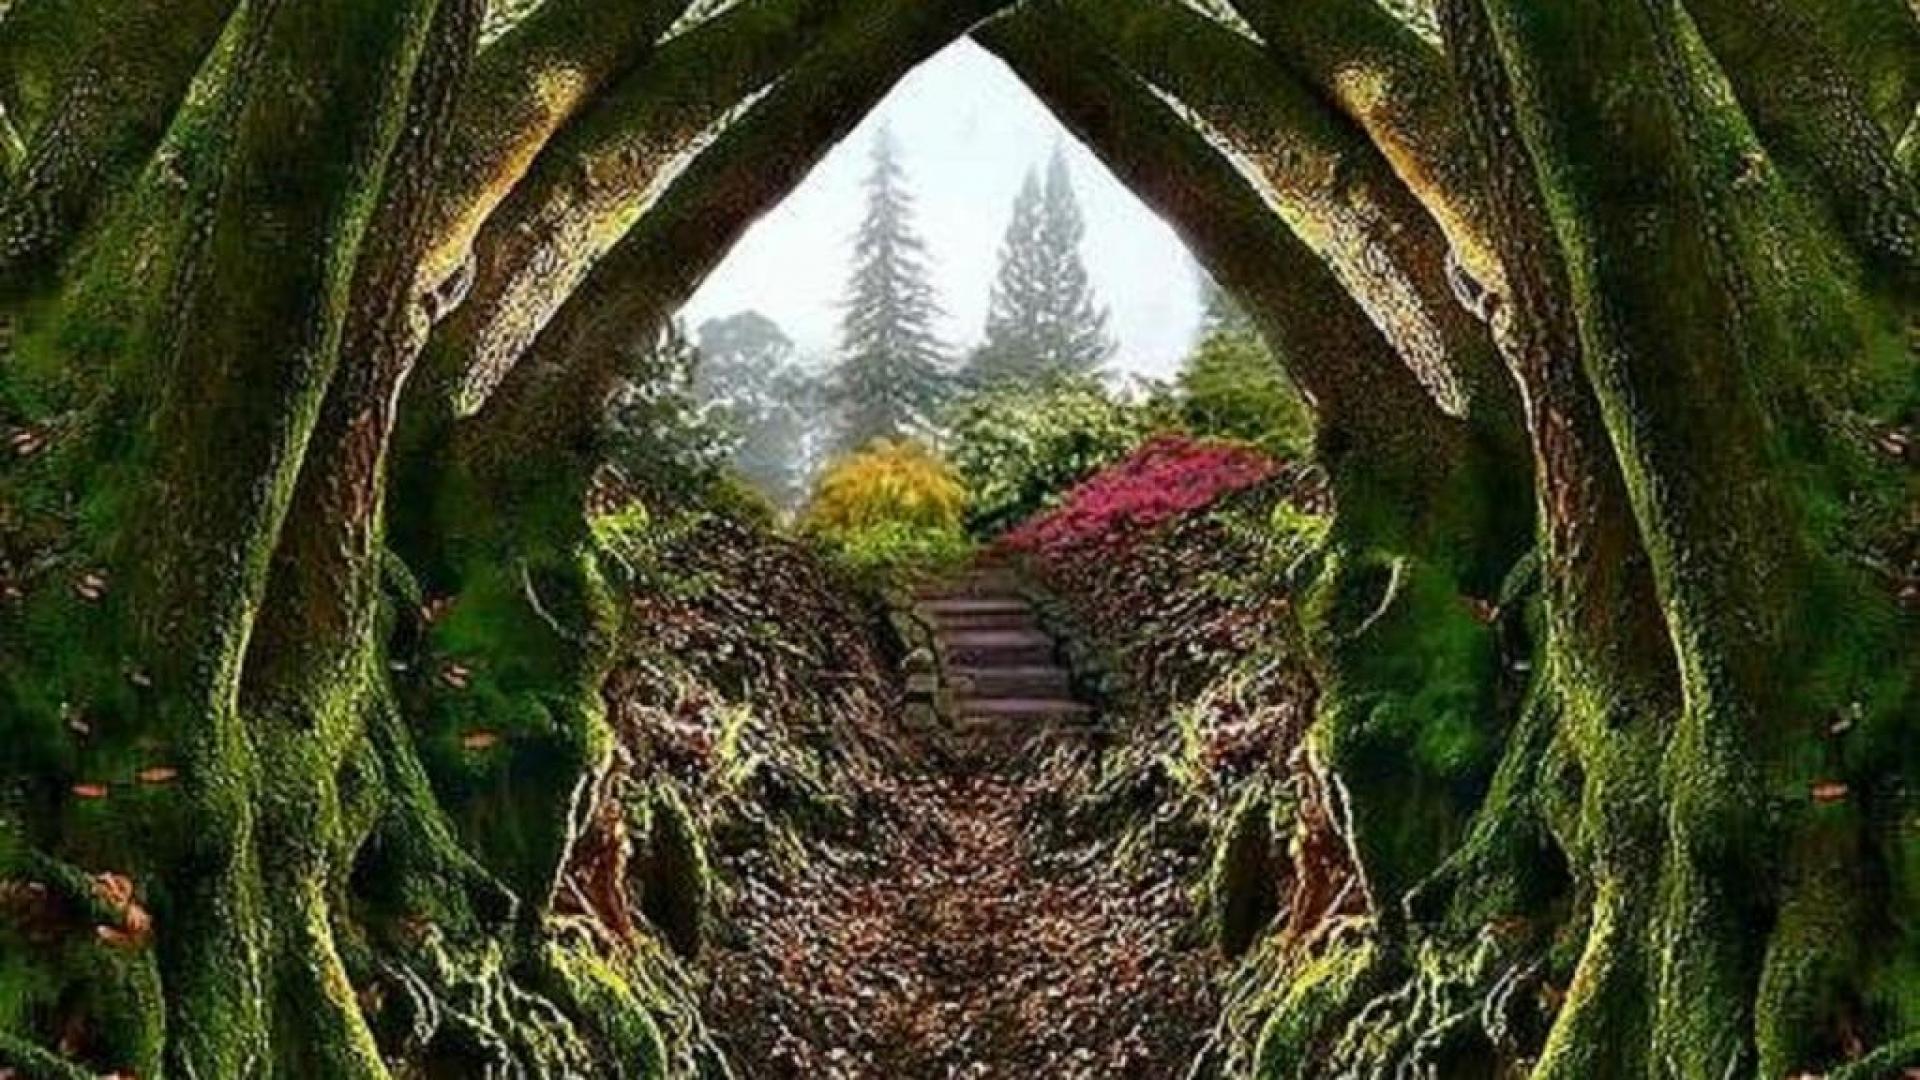 Entrance to the secret garden wallpaper - HQ Desktop